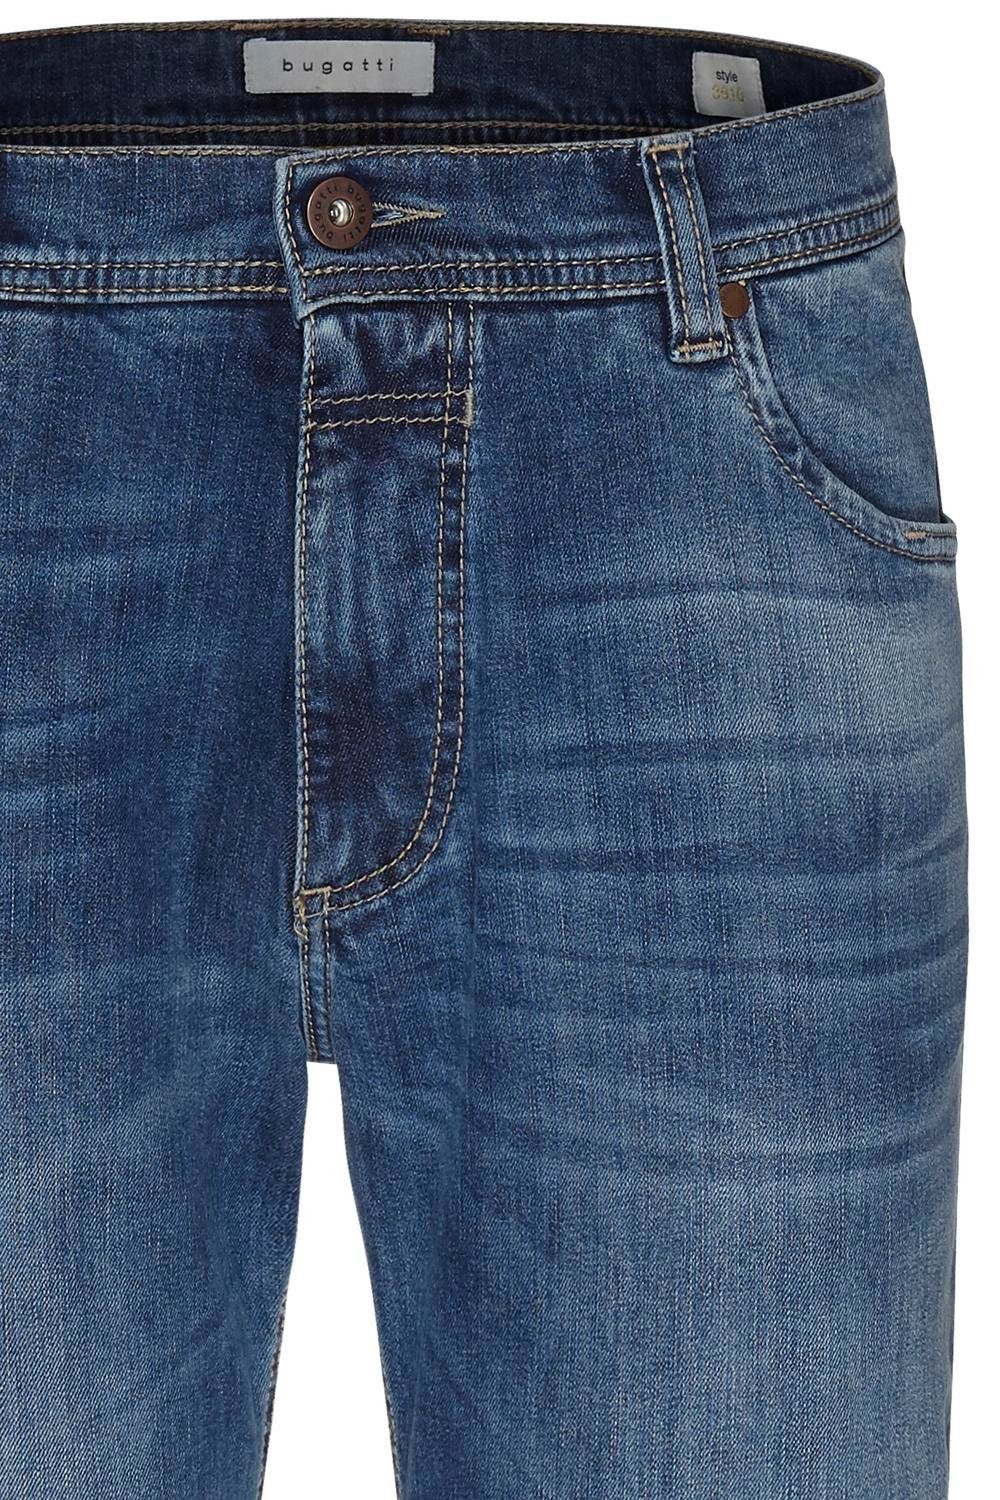 bugatti HERREN JEANS Regular-fit-Jeans